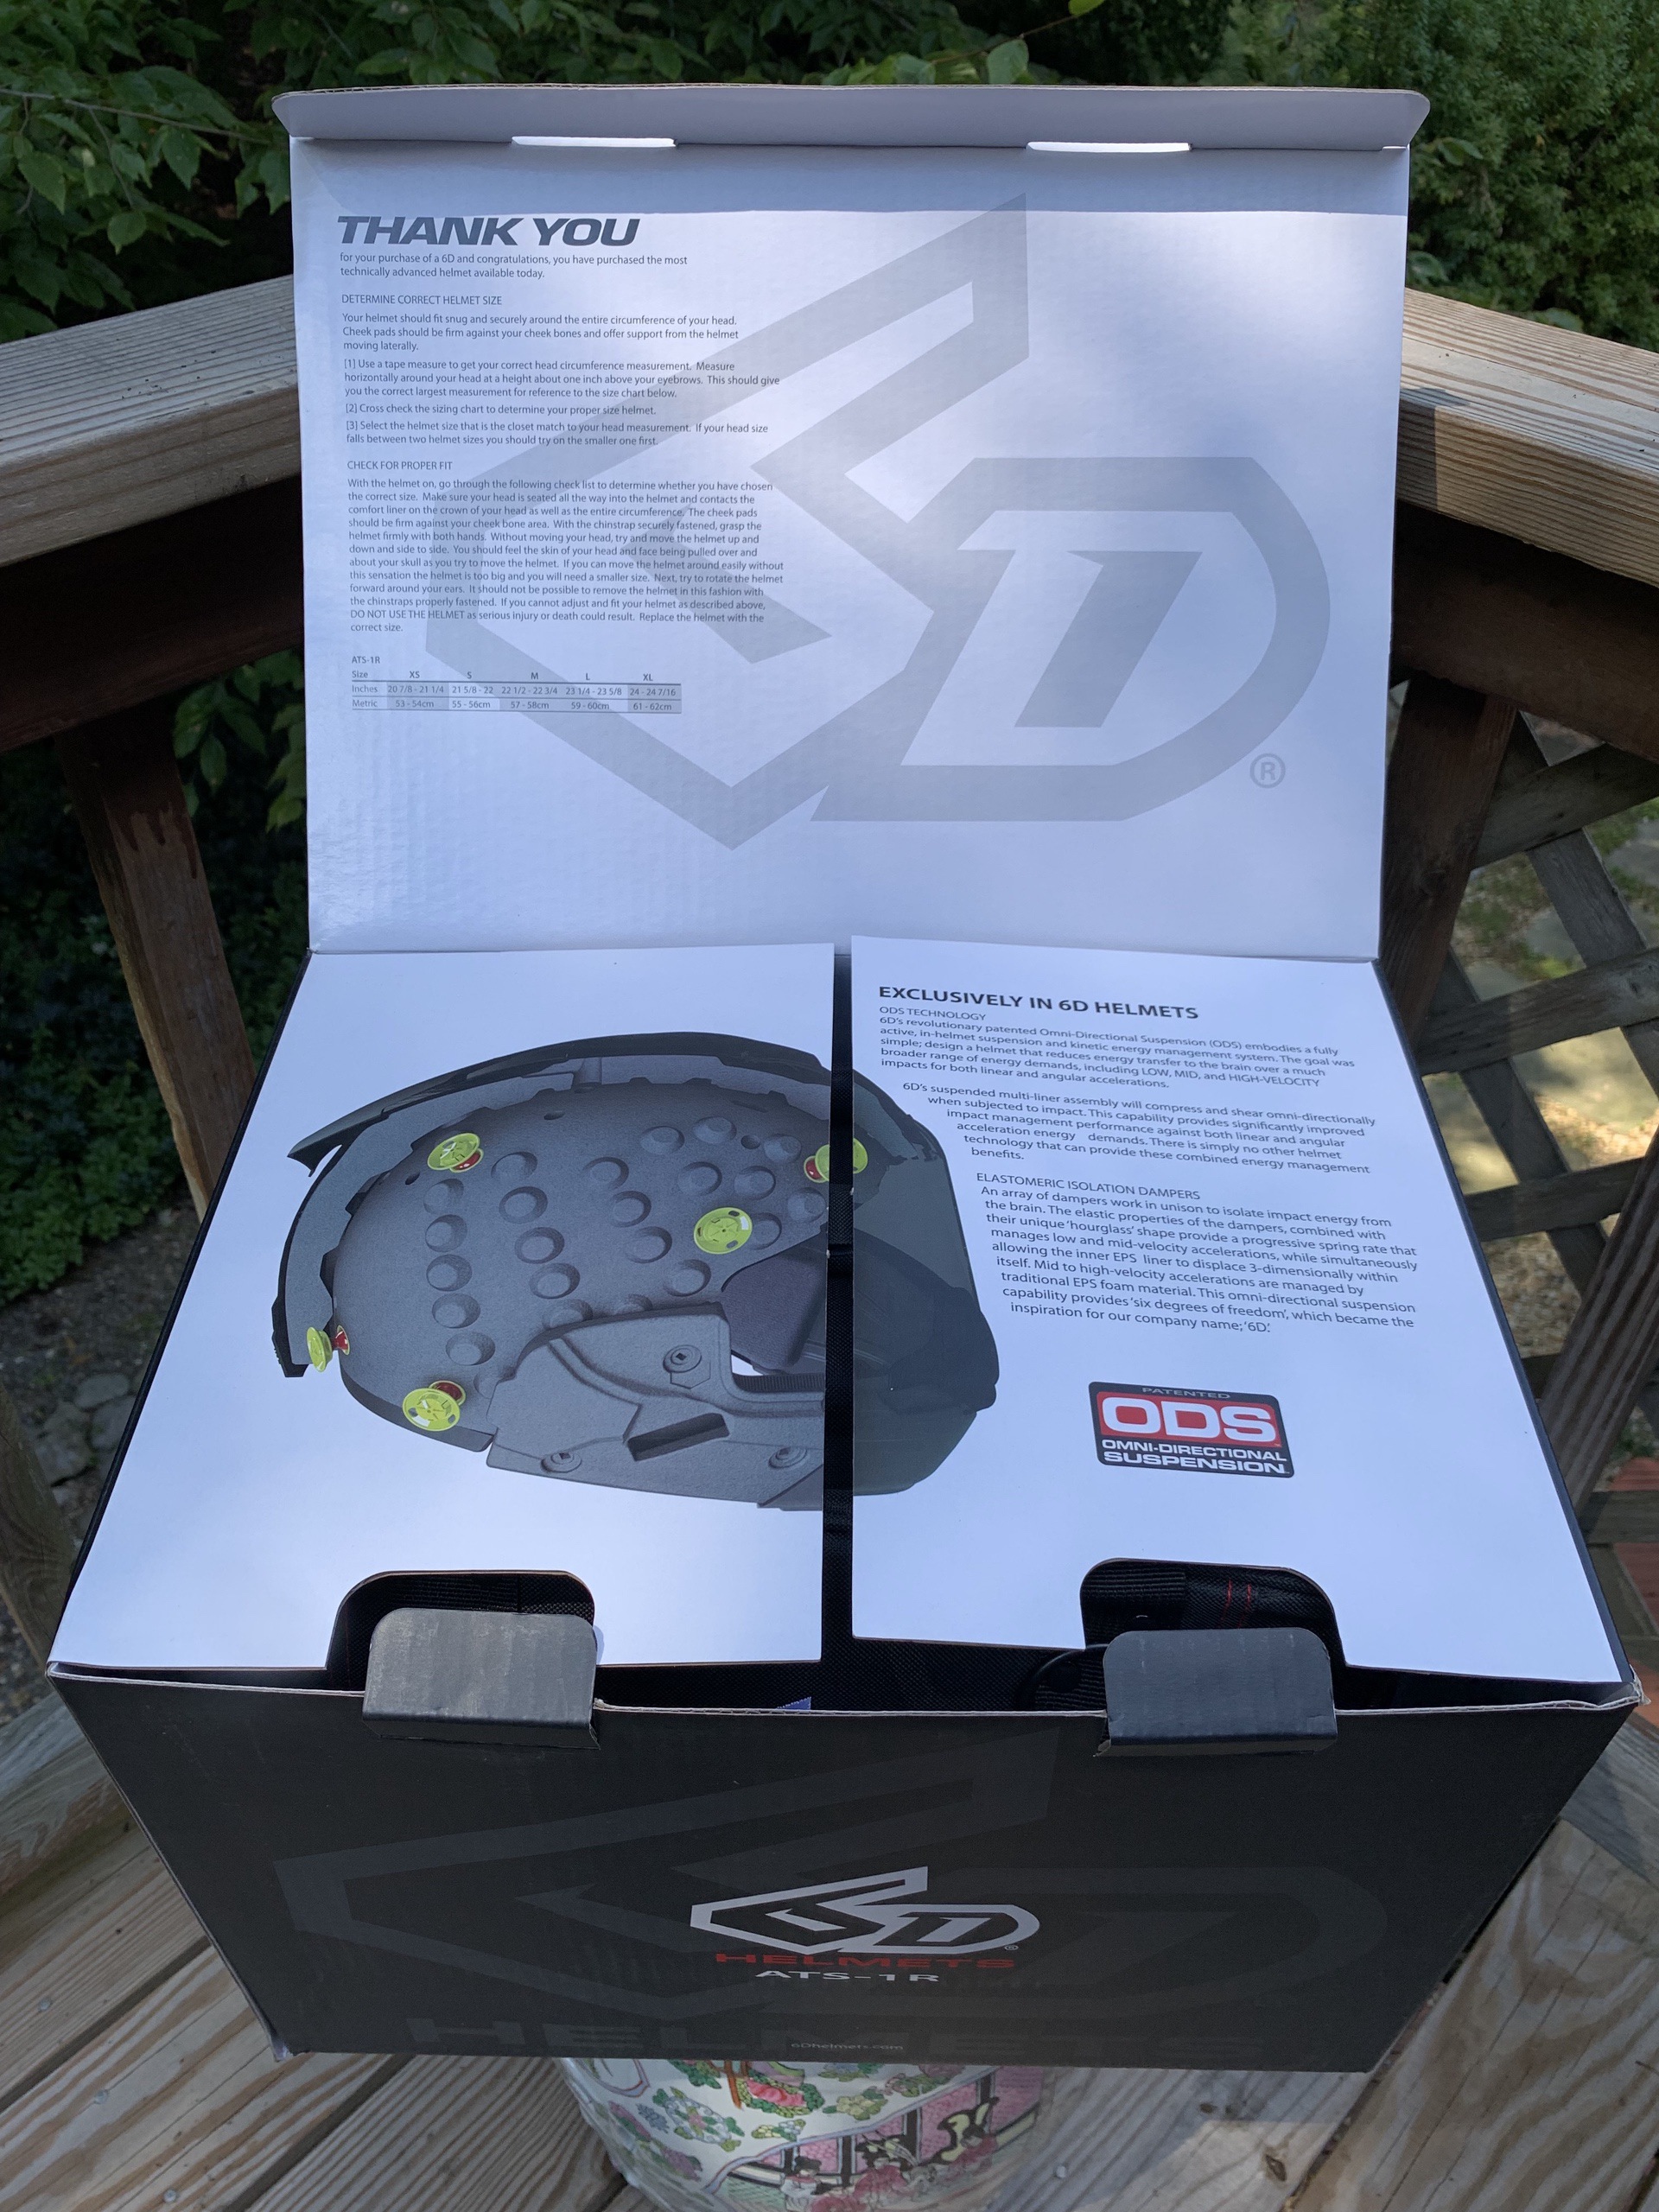 Packaging for 6D ATS-1R helmet